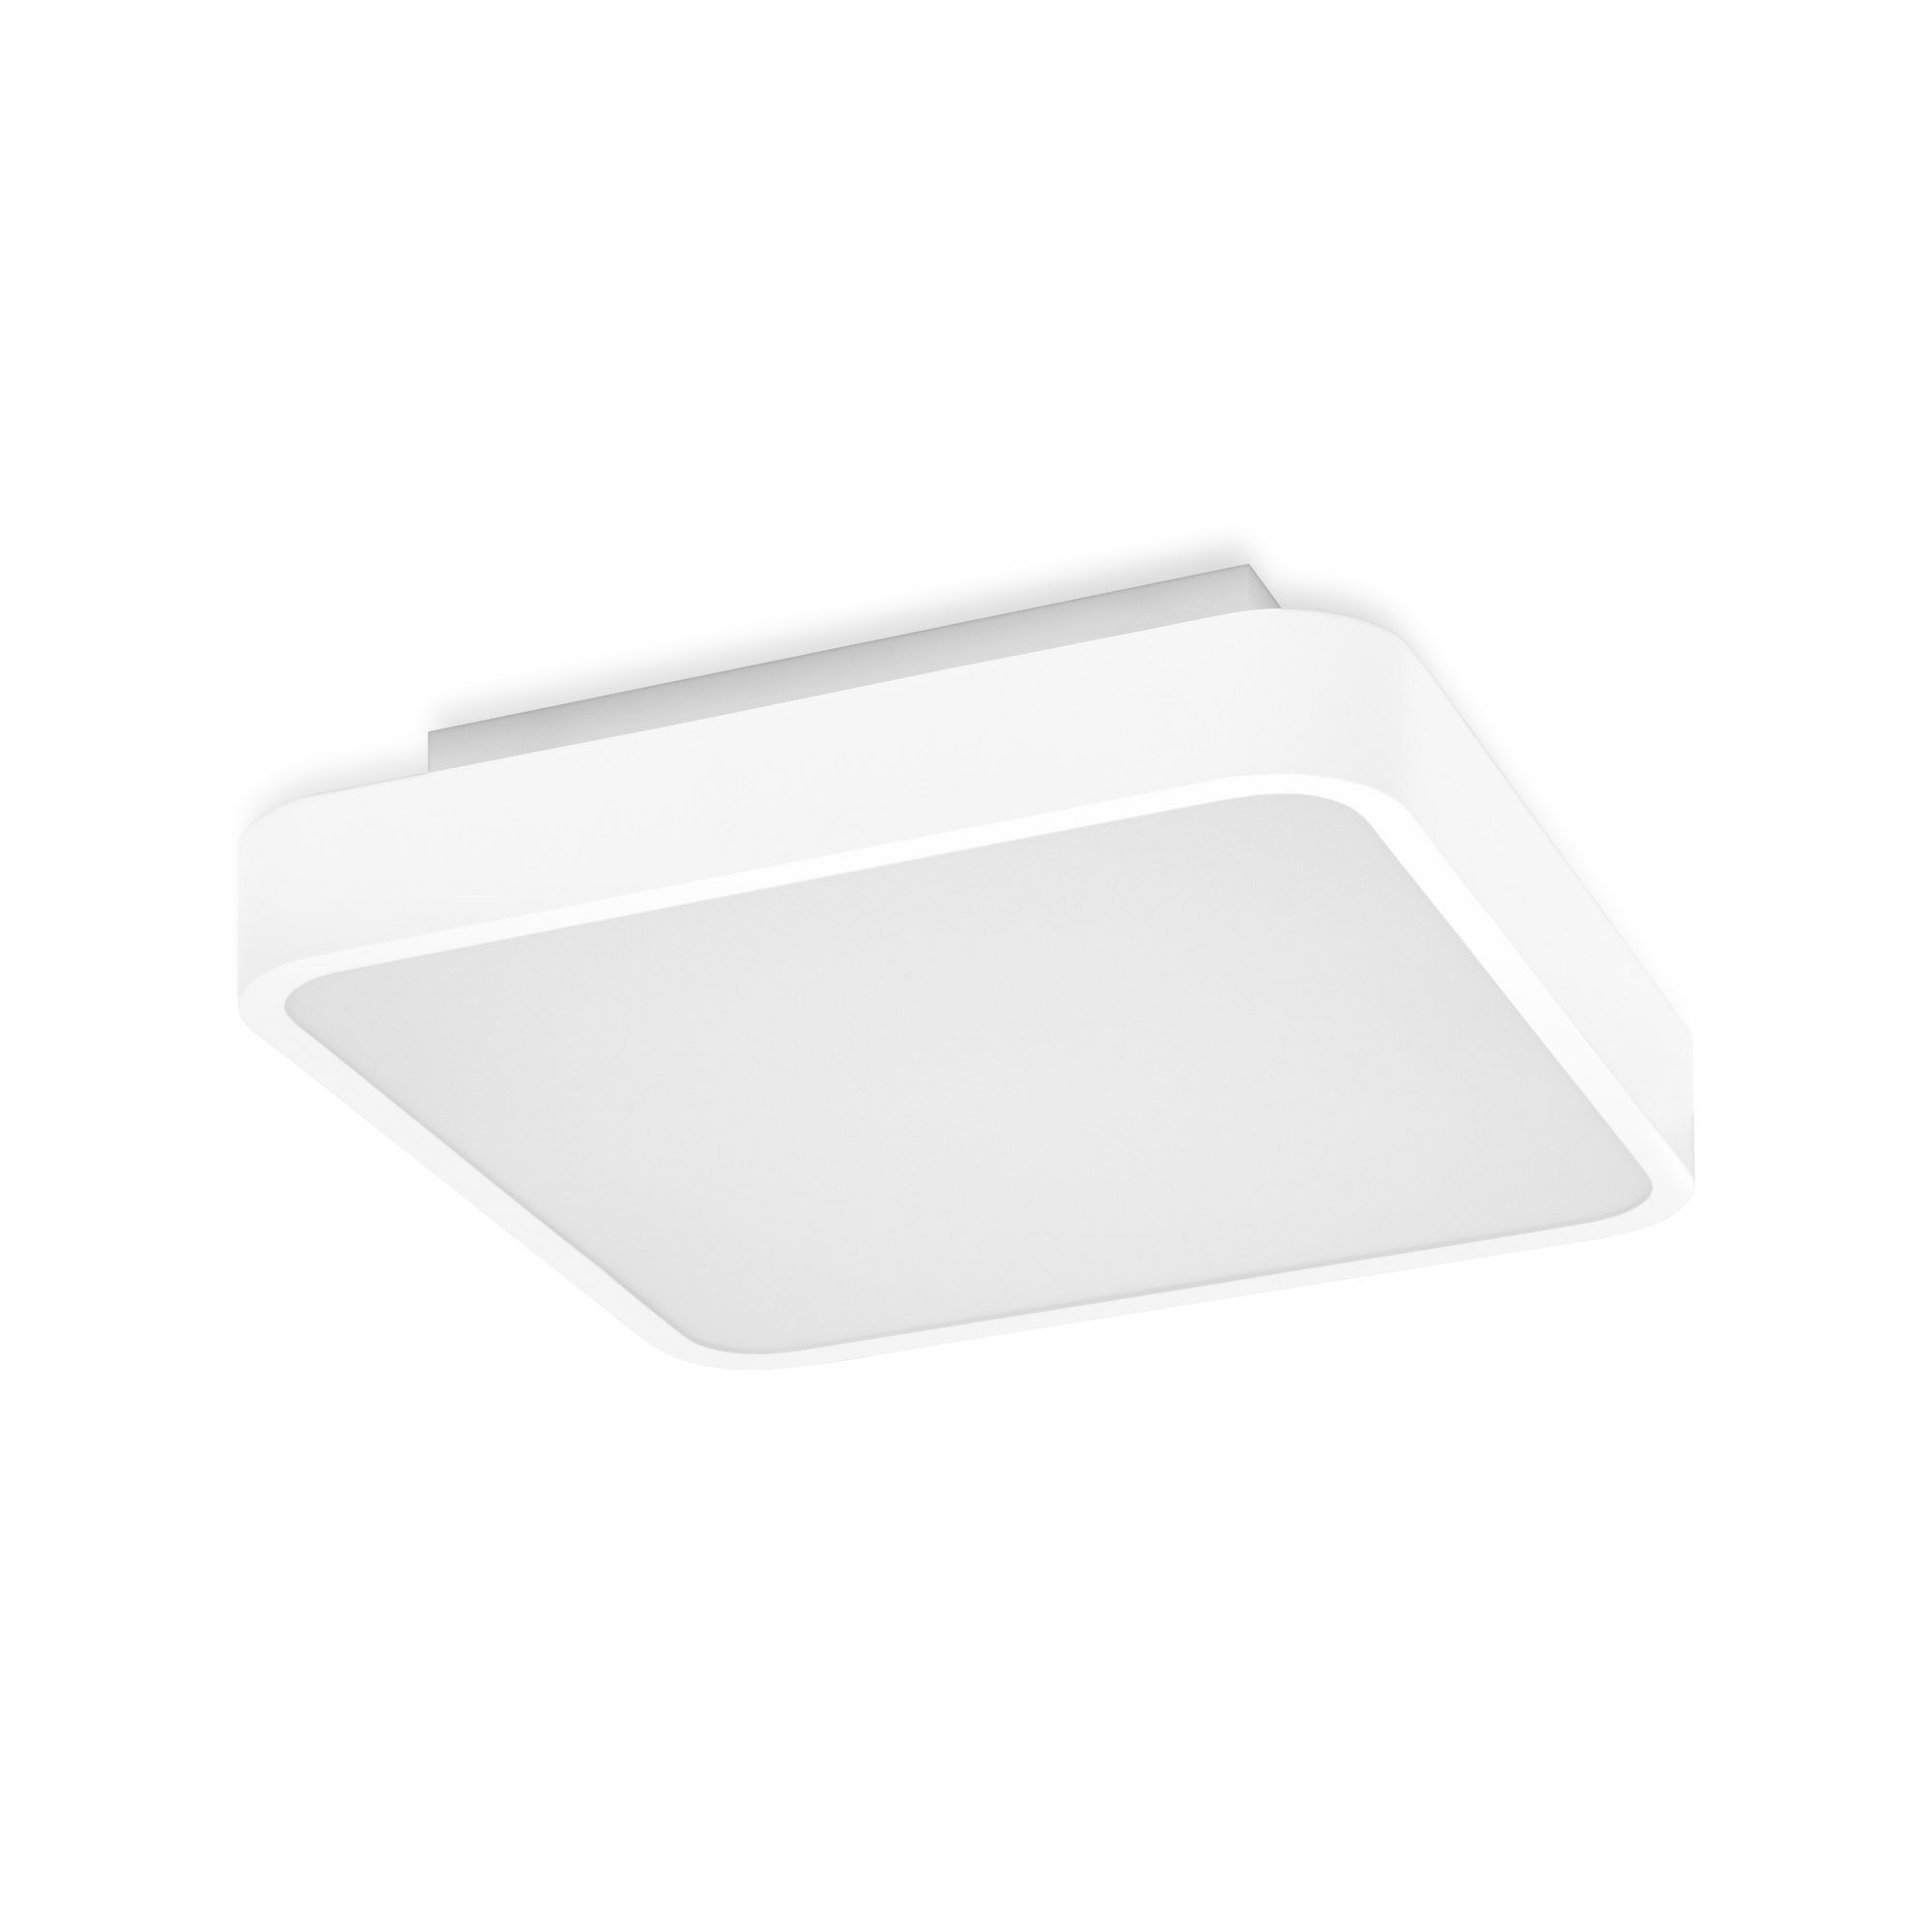 LEDVANCE SMART+ WiFi Tunable White RGB LED Ceiling Light ORBIS Backlight 350x350mm white 2400lm